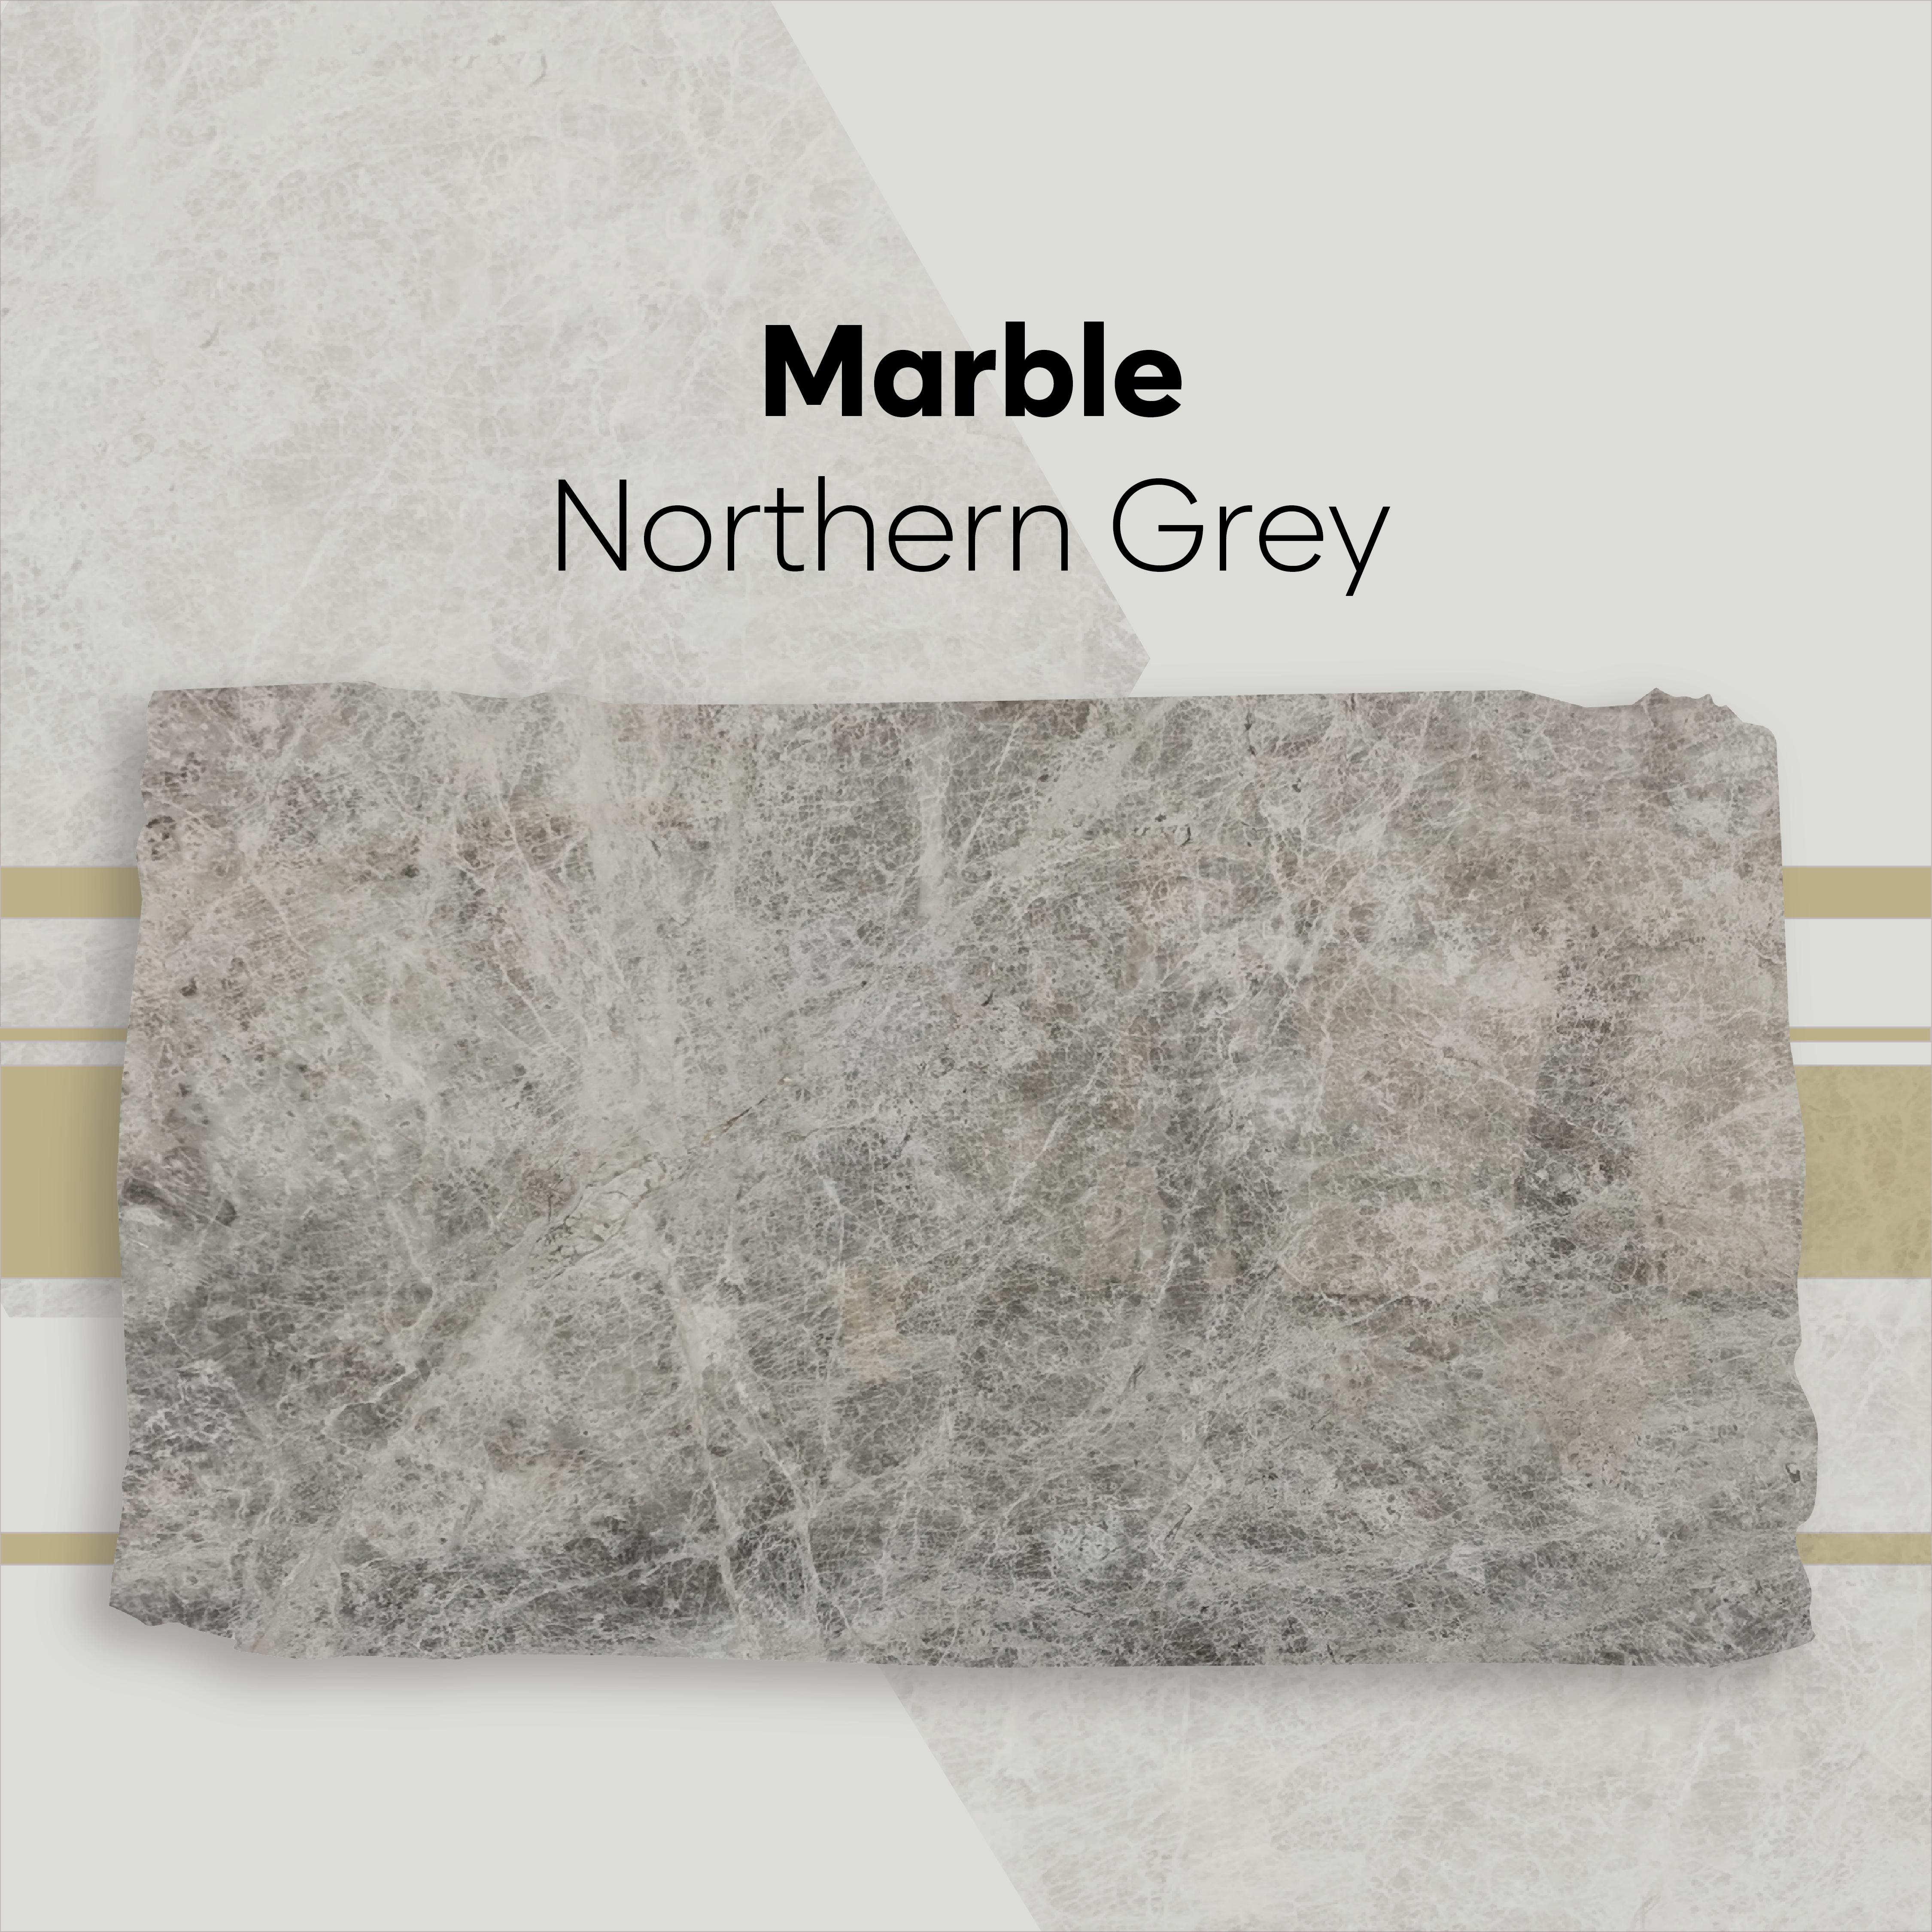 Northern Grey-01.jpg